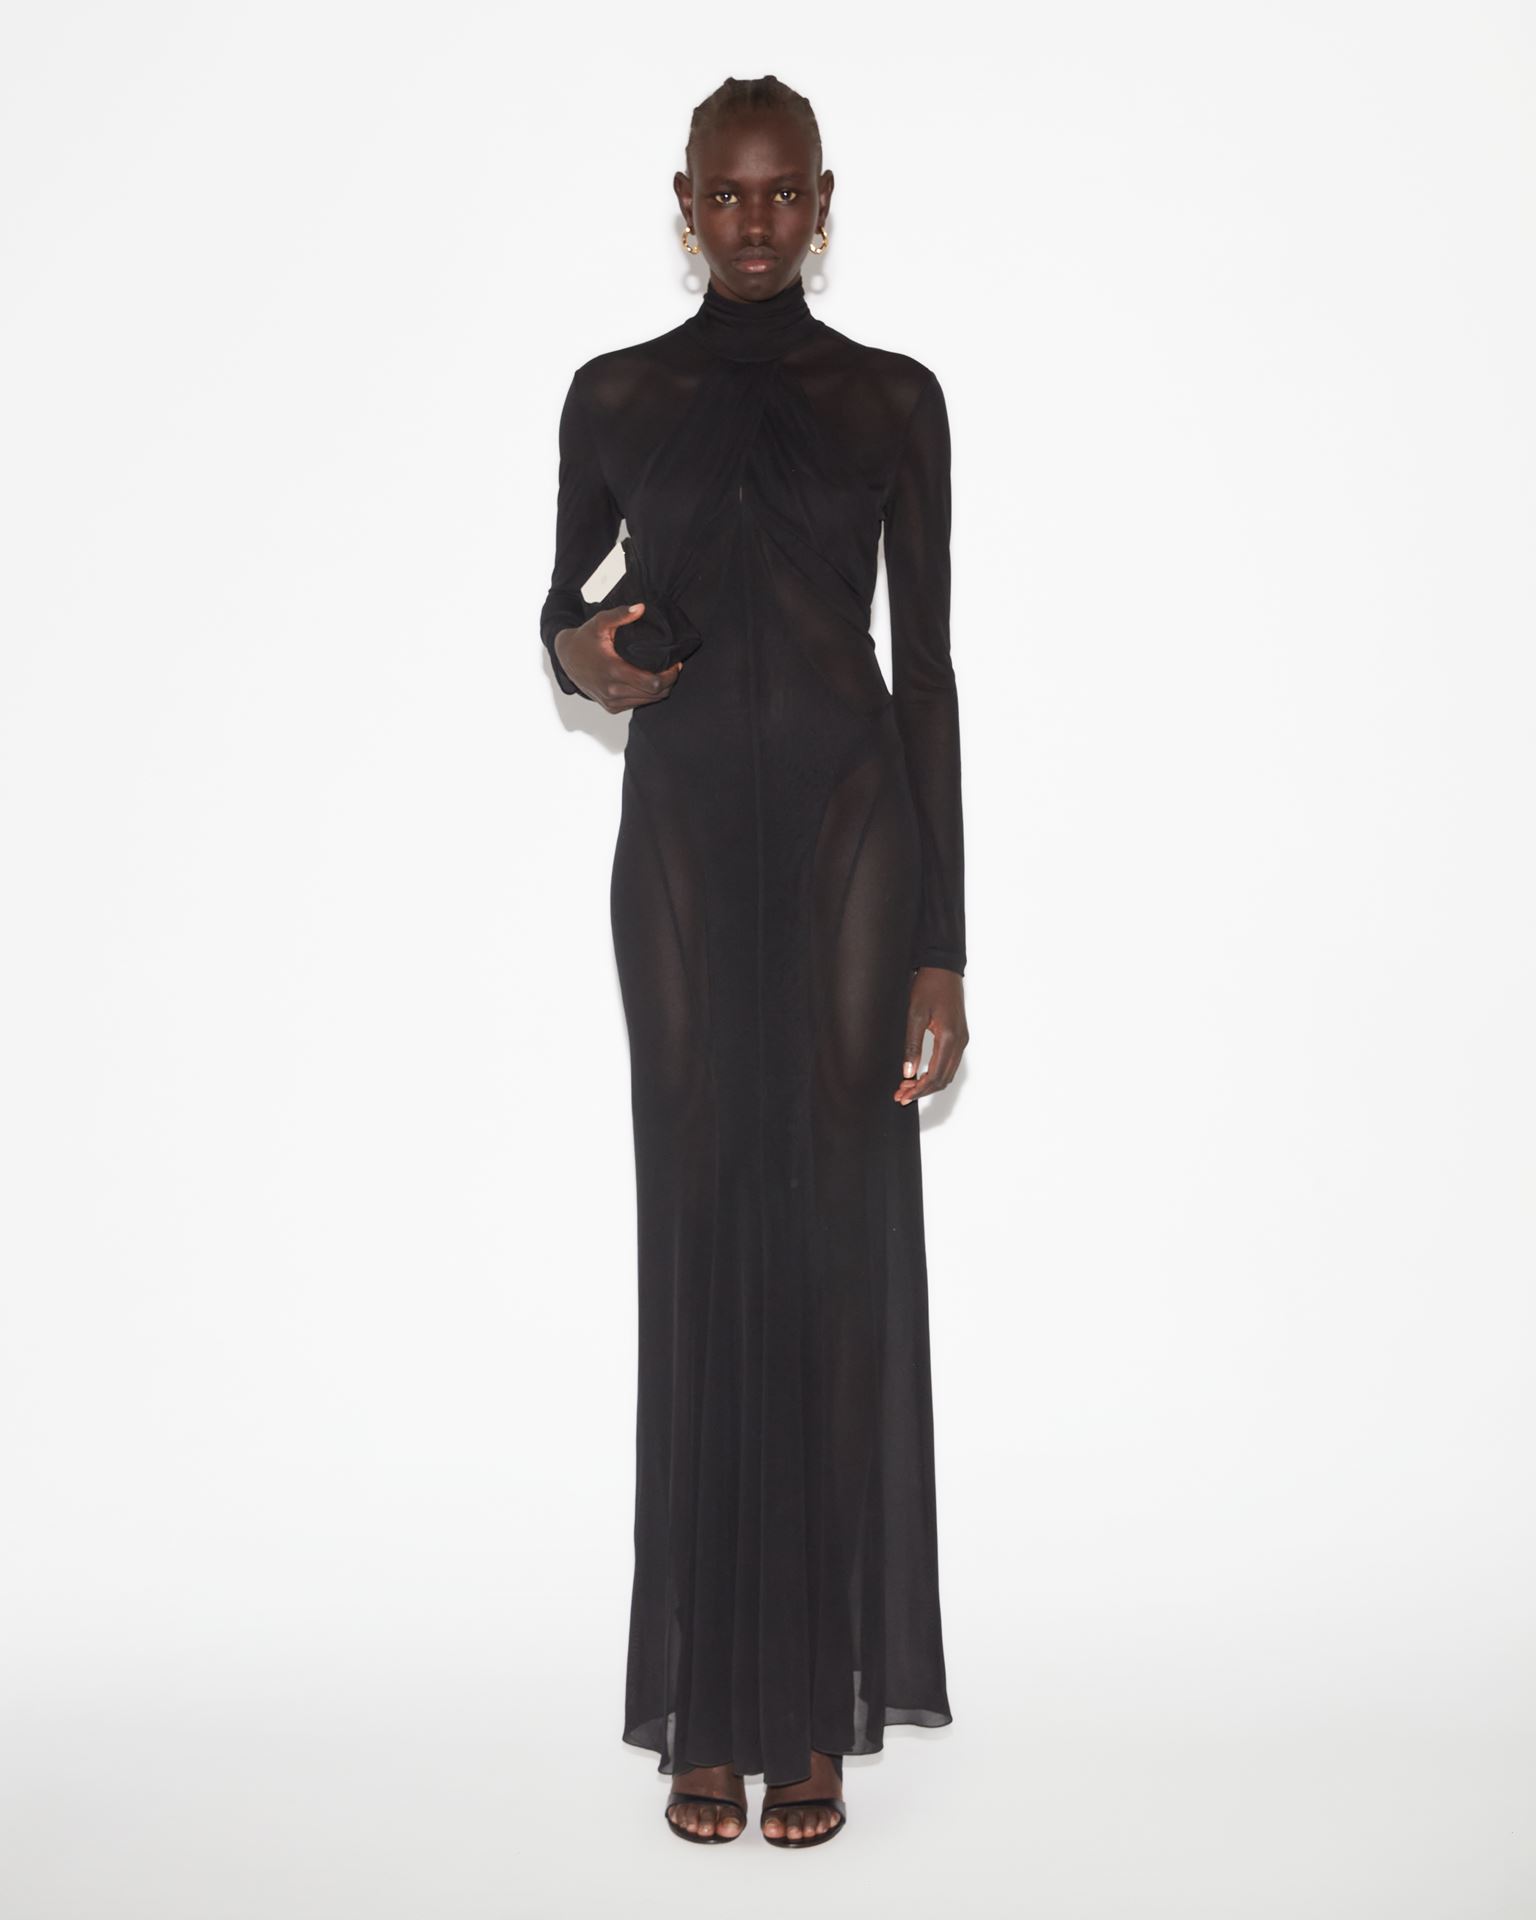 Isabel Marant, Rimma Dress - Women - Black